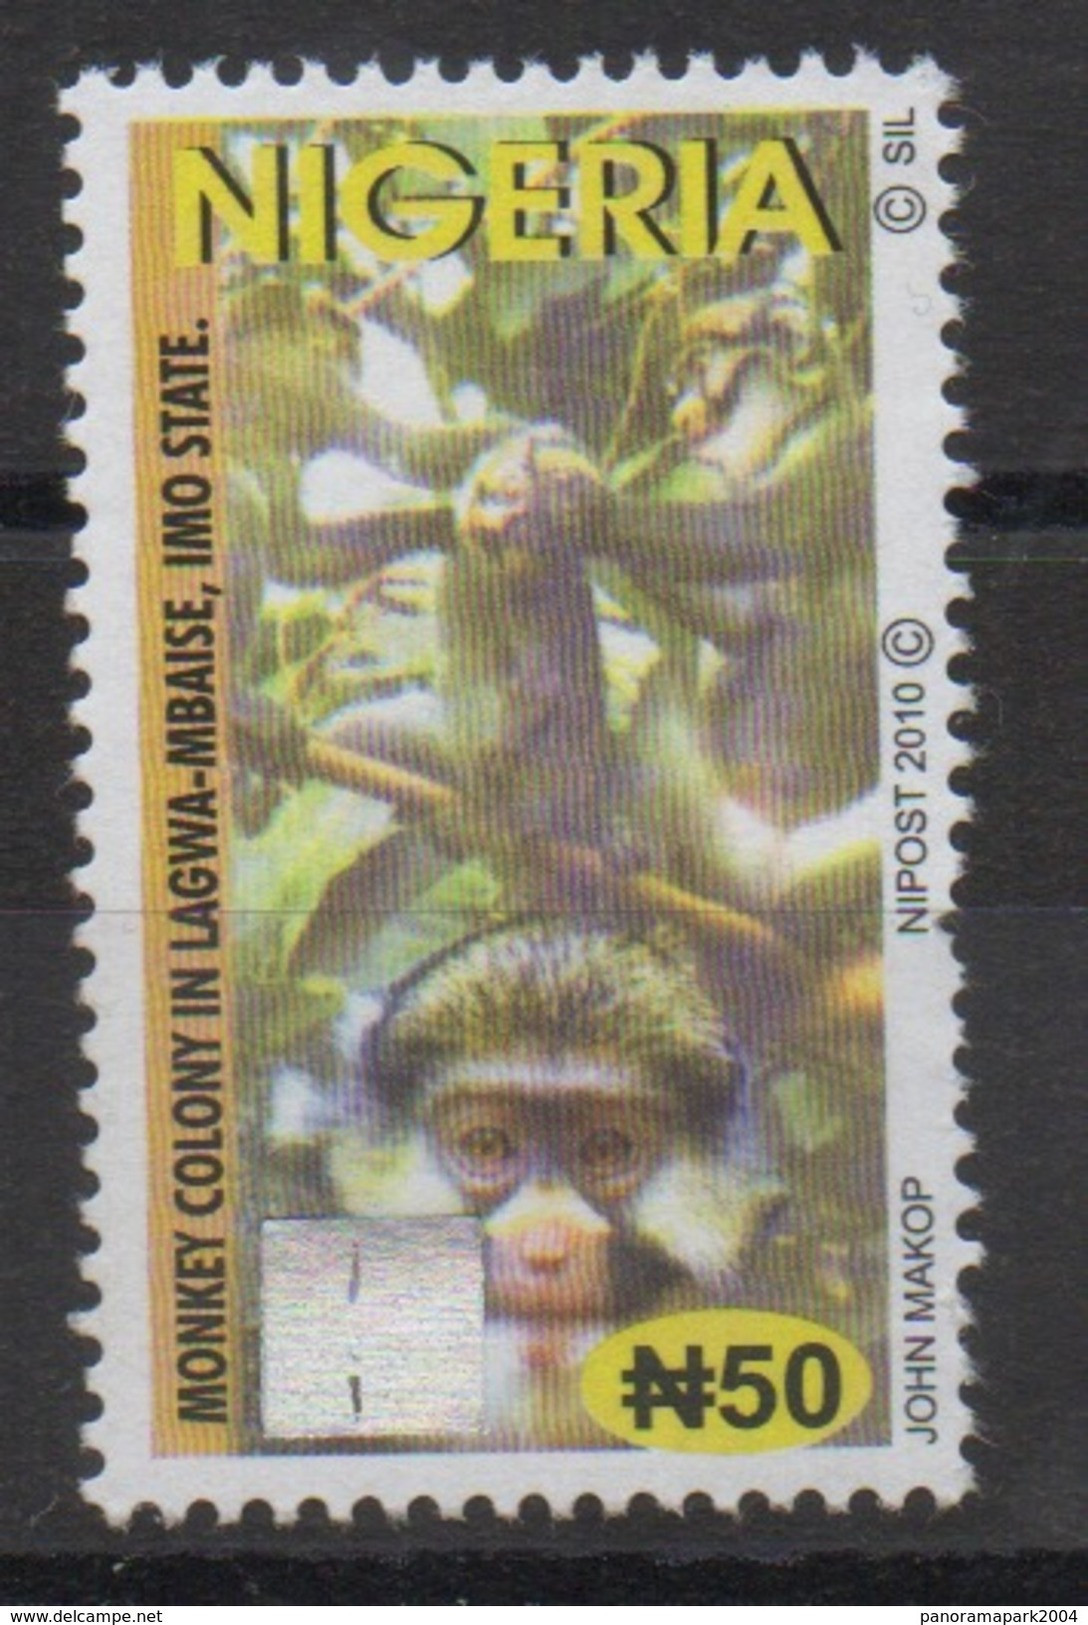 Nigeria 2010 Hologramm Hologramme Hologram Definitive Monkey Singe Ape Affe Fauna Faune MNH** - Nigeria (1961-...)